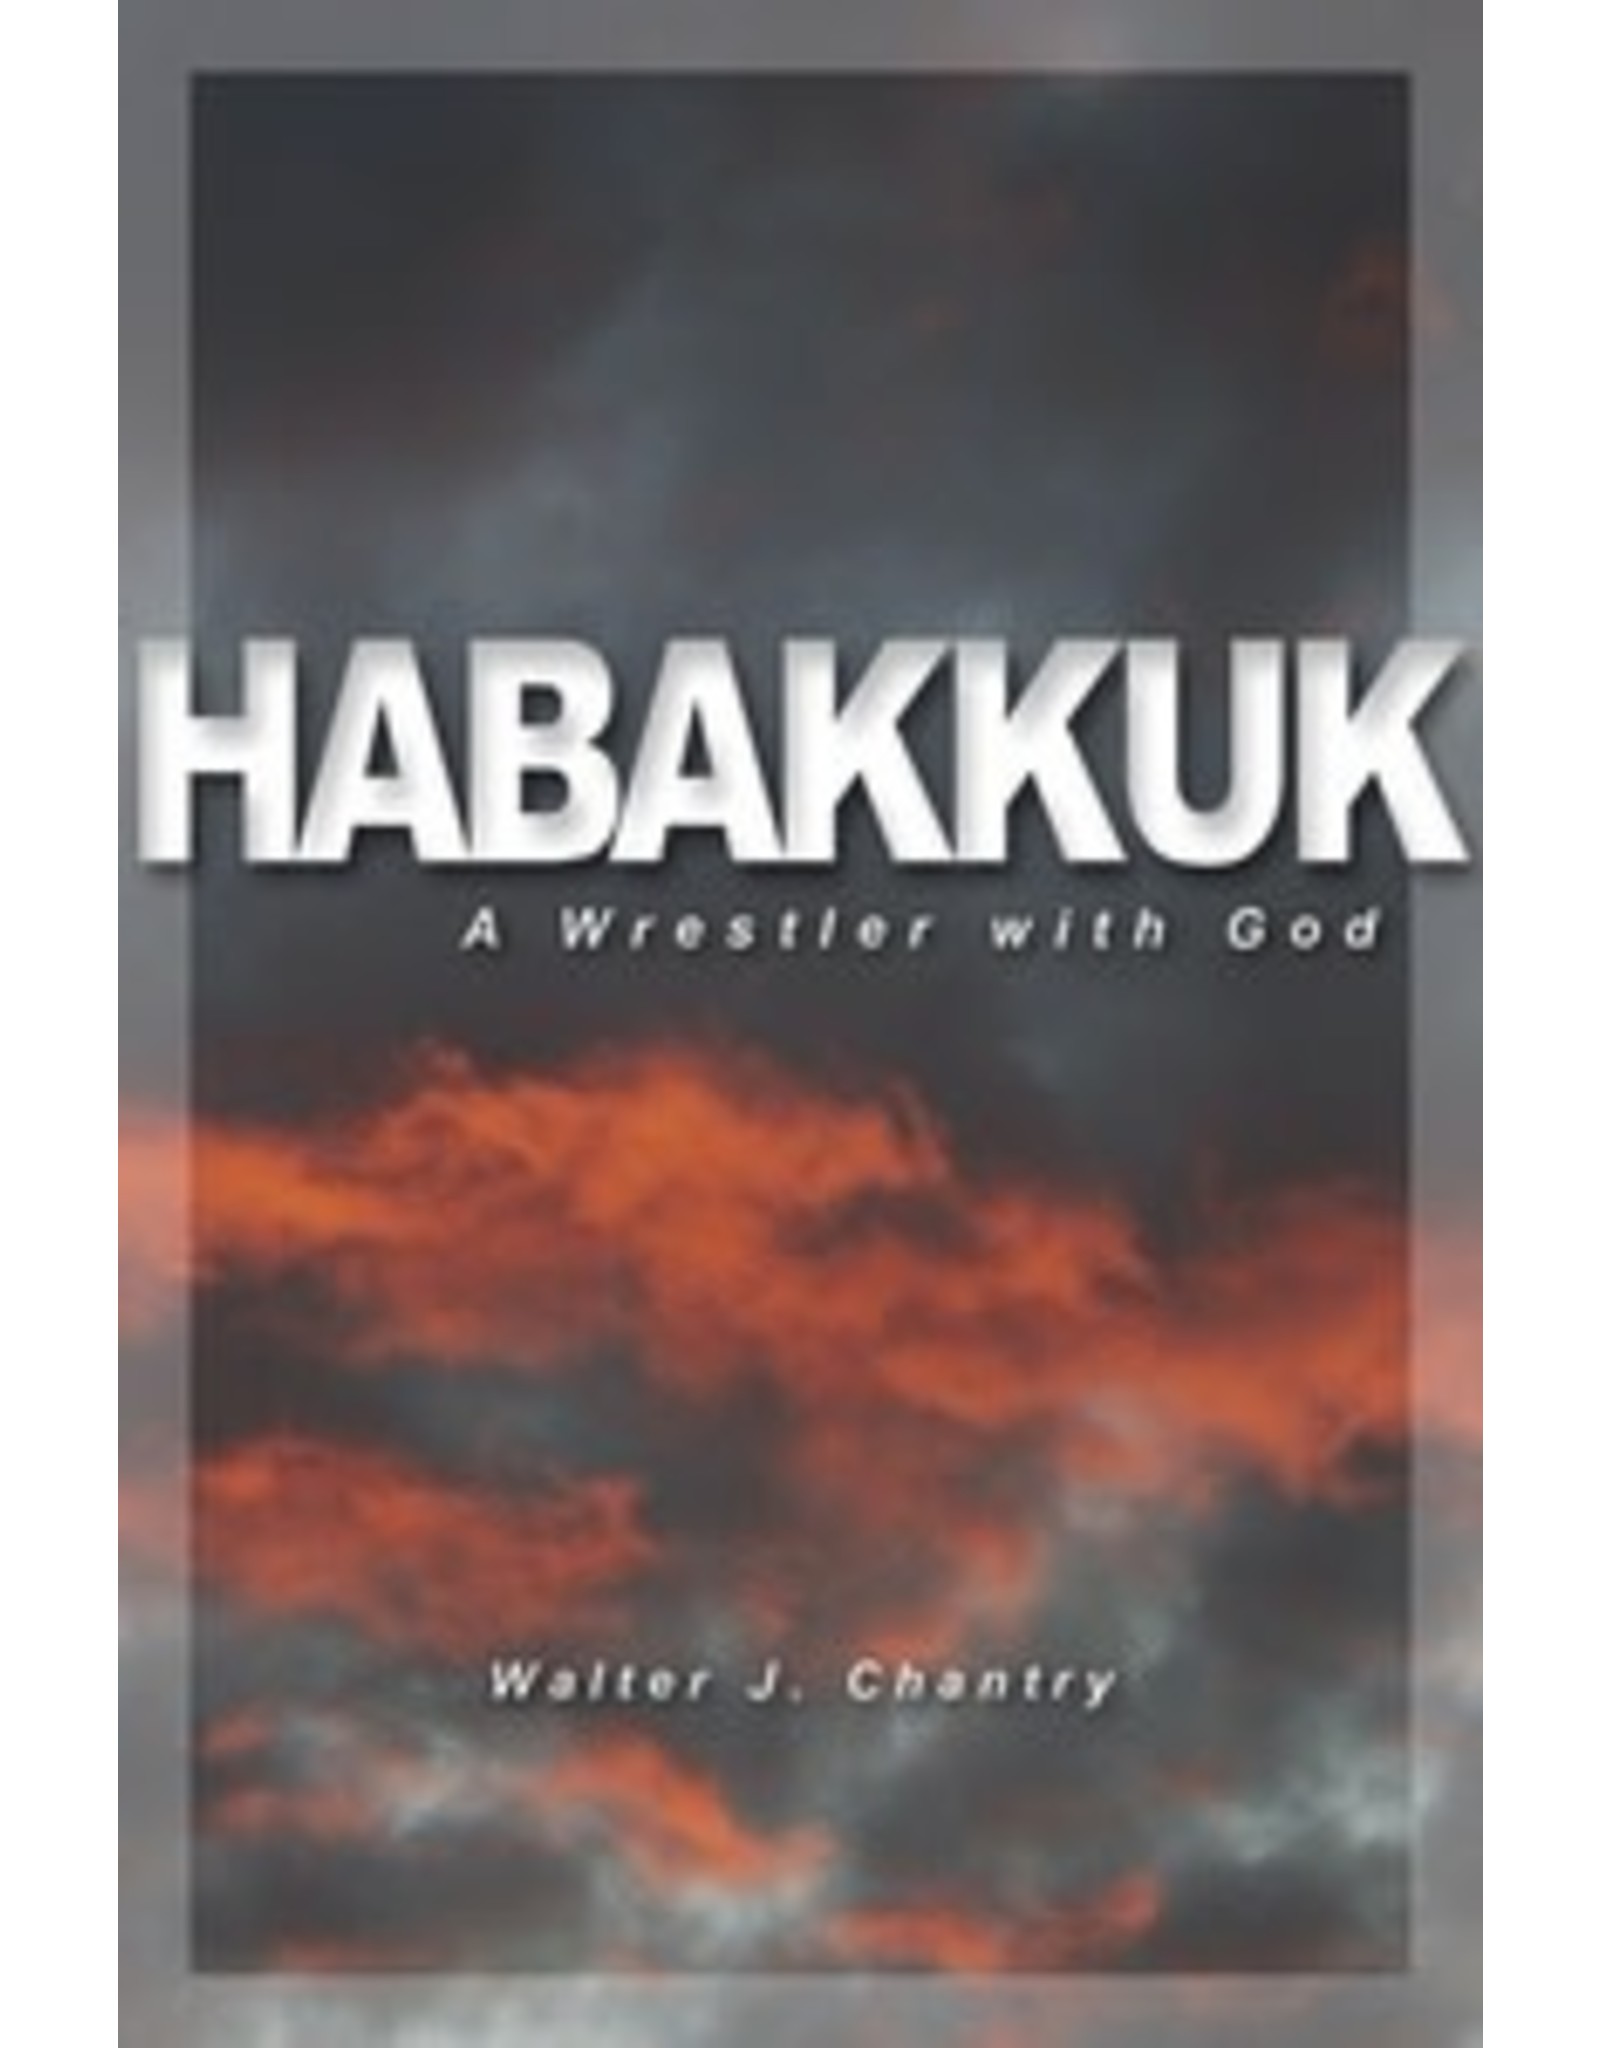 Walter J Chantry Habakkuk: A Wrestler with God